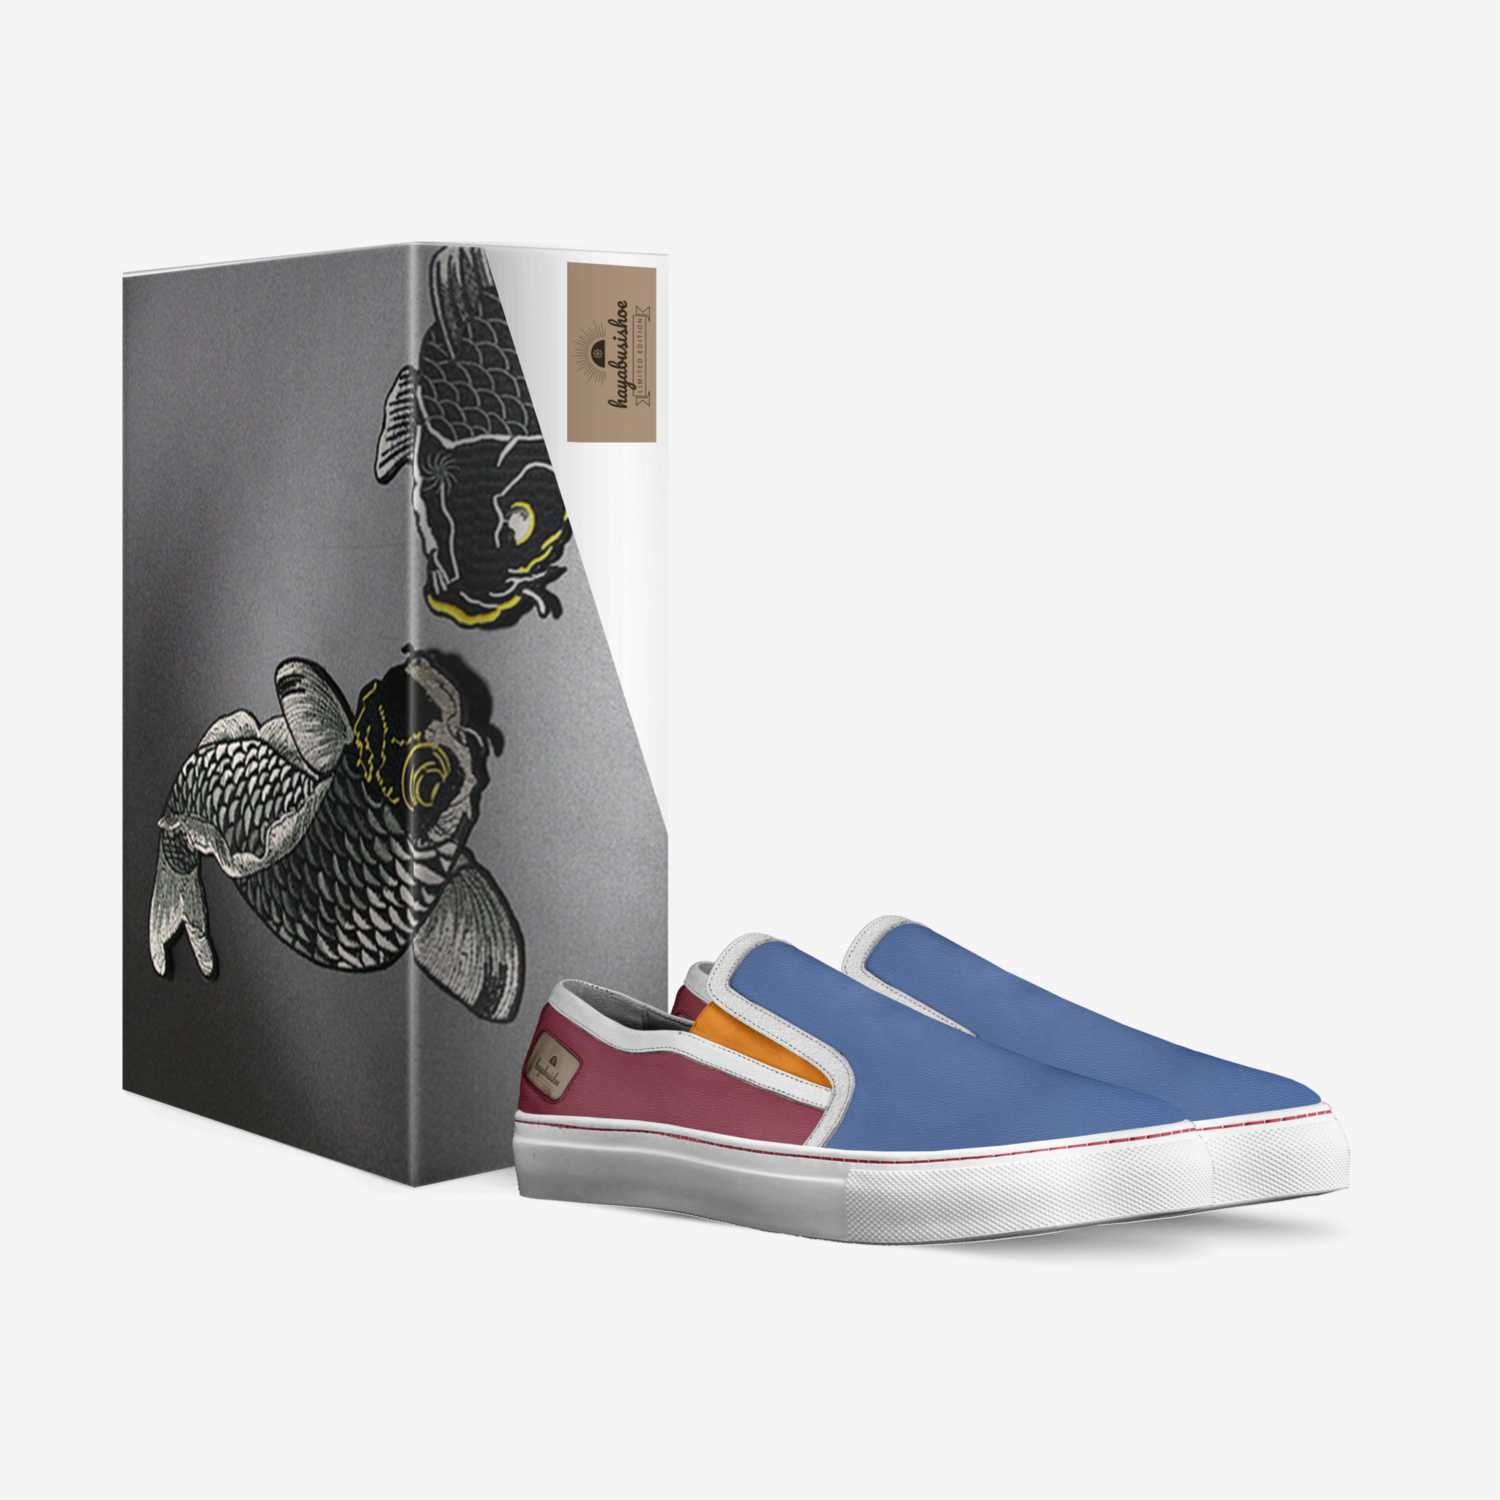 hayabusishoe custom made in Italy shoes by Laoren Silfamareta | Box view